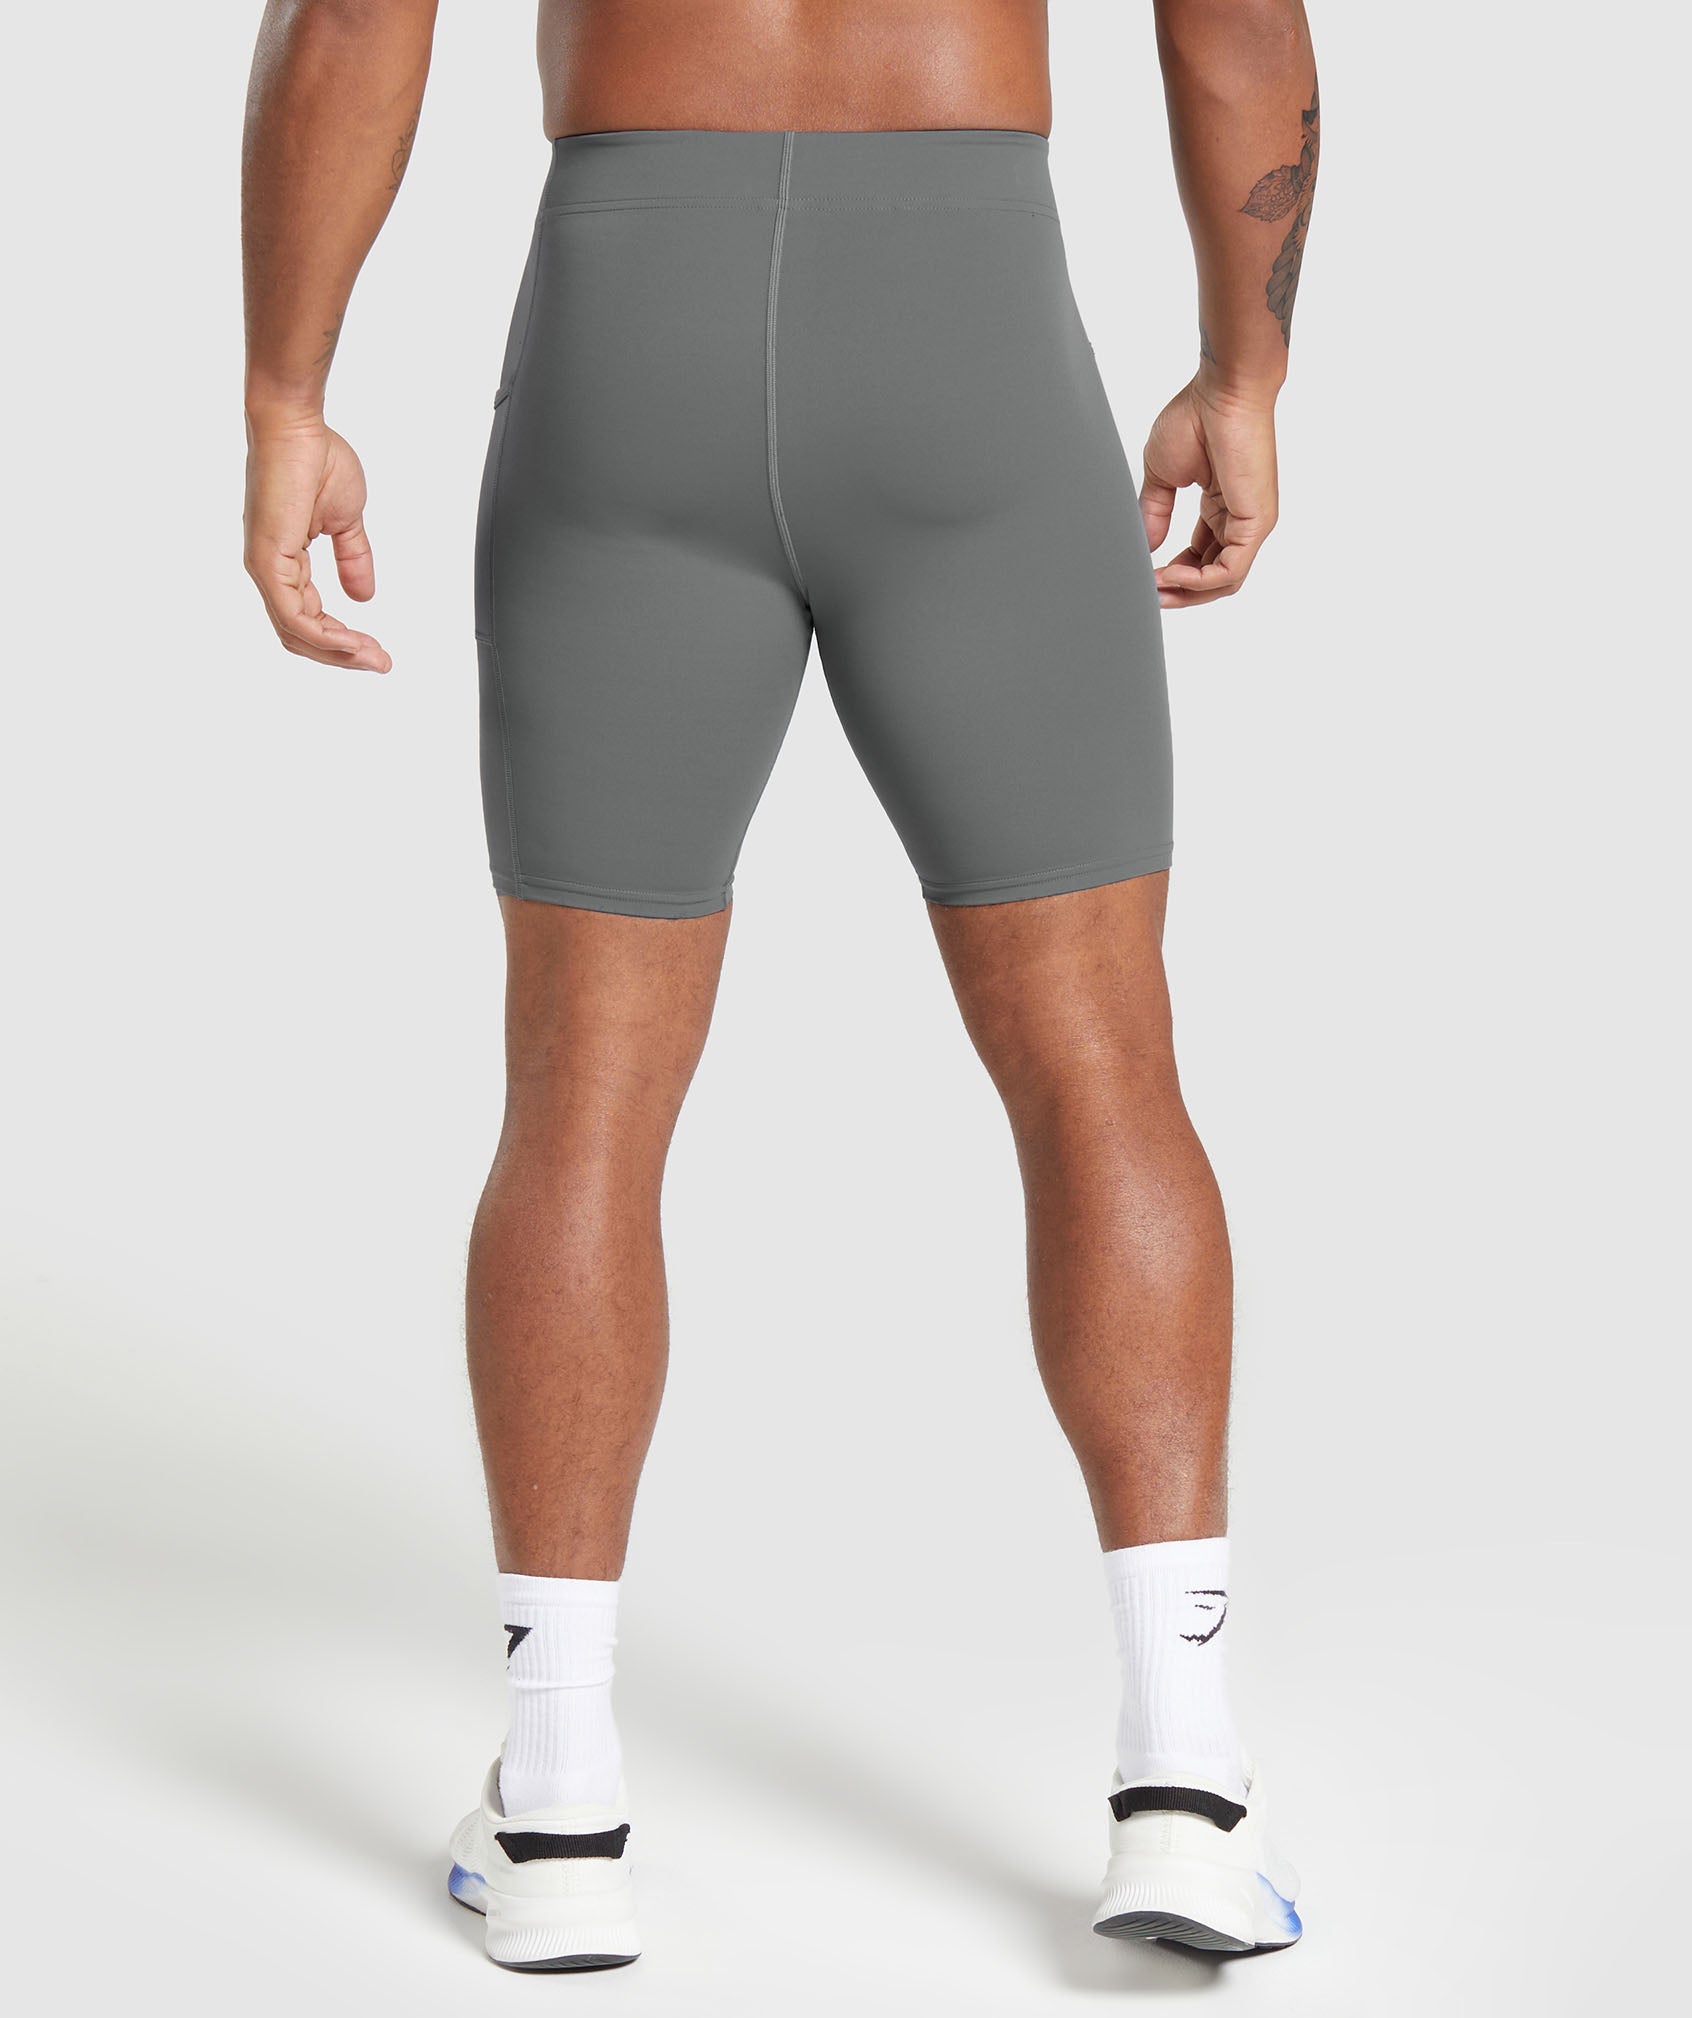 Gymshark Control Baselayer Shorts - Pitch Grey